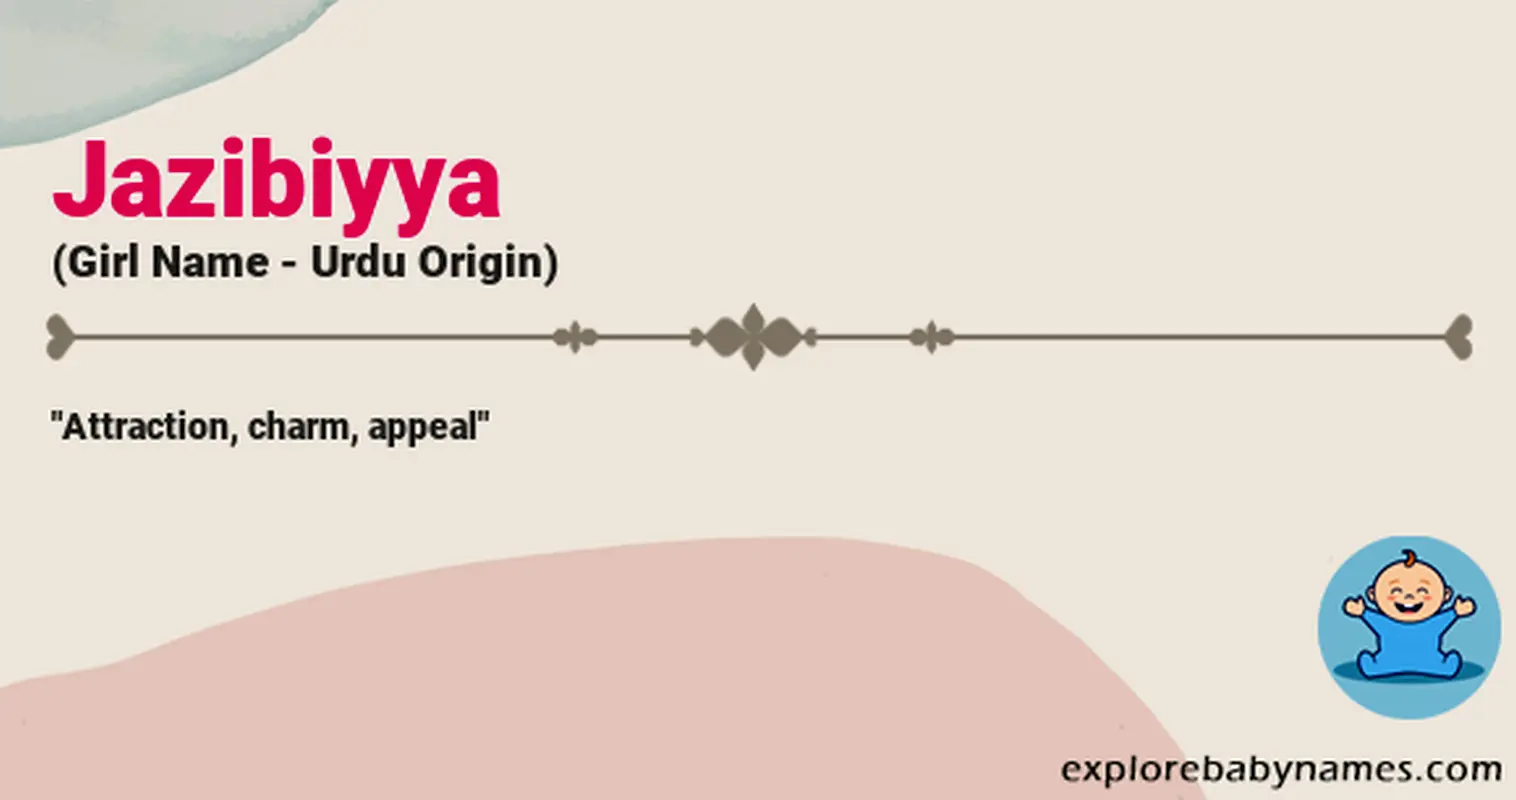 Meaning of Jazibiyya